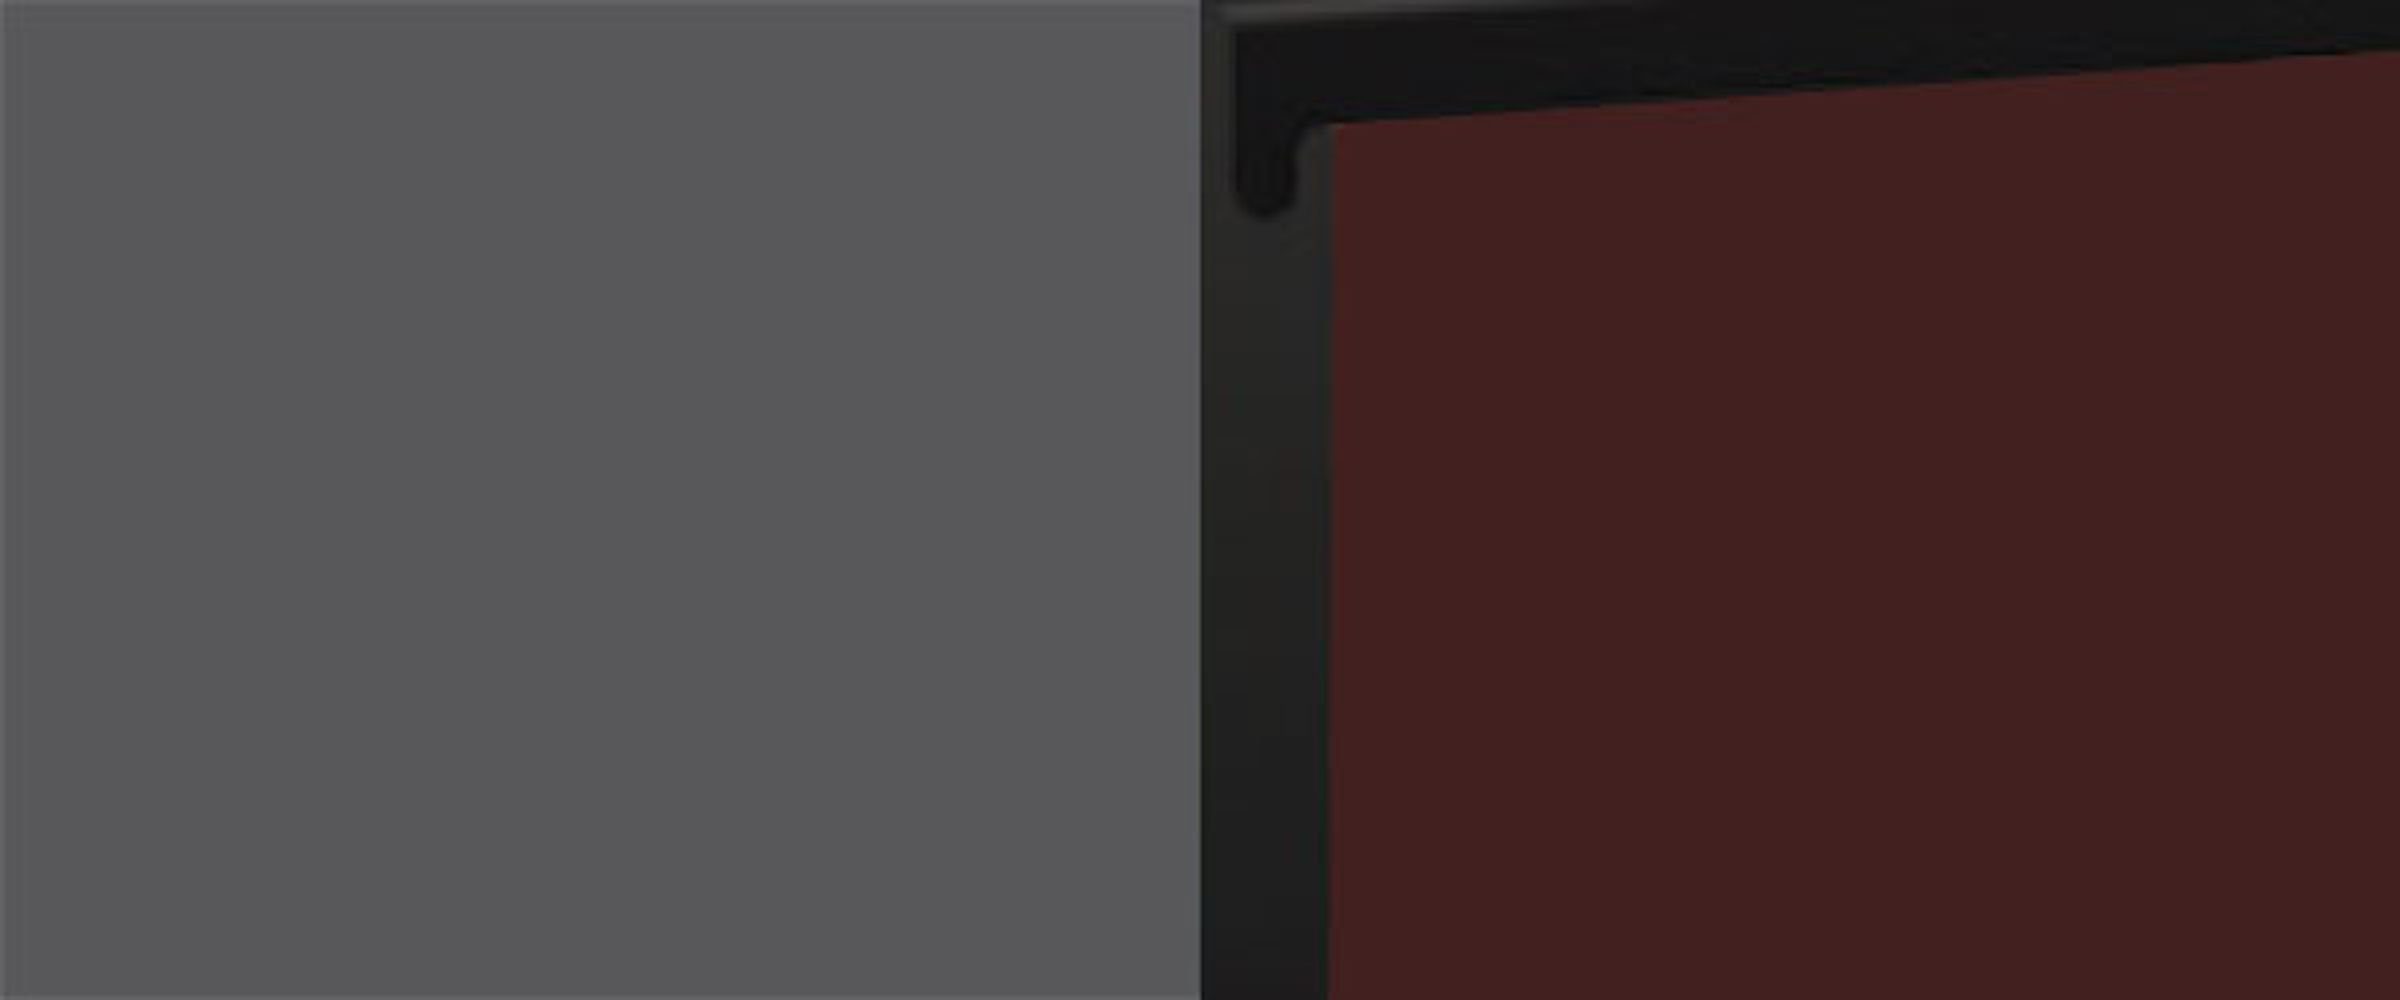 (Teilauszug) Korpusfarbe Backofenumbauschrank Schublade 60cm Front- Feldmann-Wohnen 1 & grifflos super matt wählbar rubinrot Velden